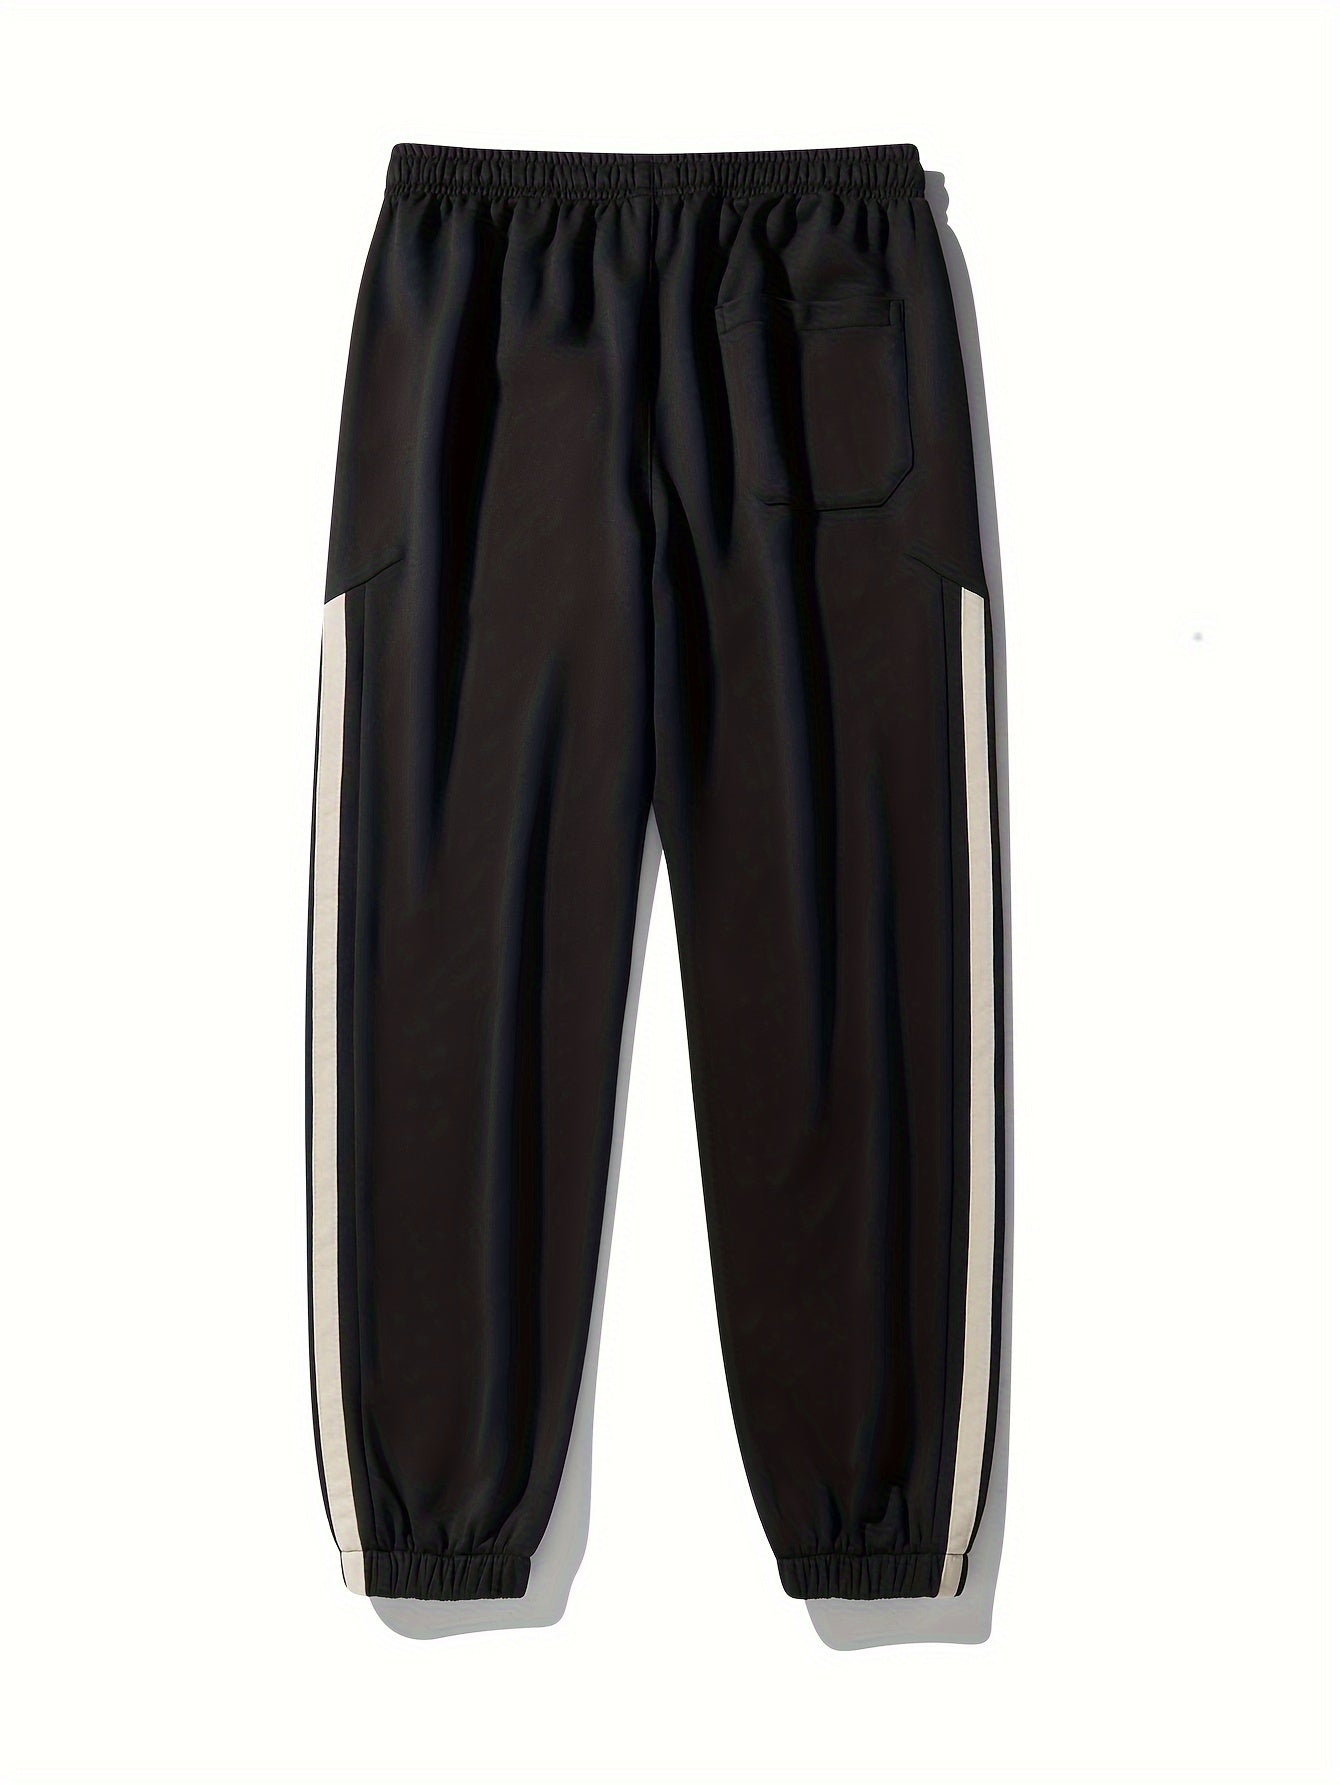 Men's Breathable Jogger with Stripes & Pockets - Versatile & Comfortable